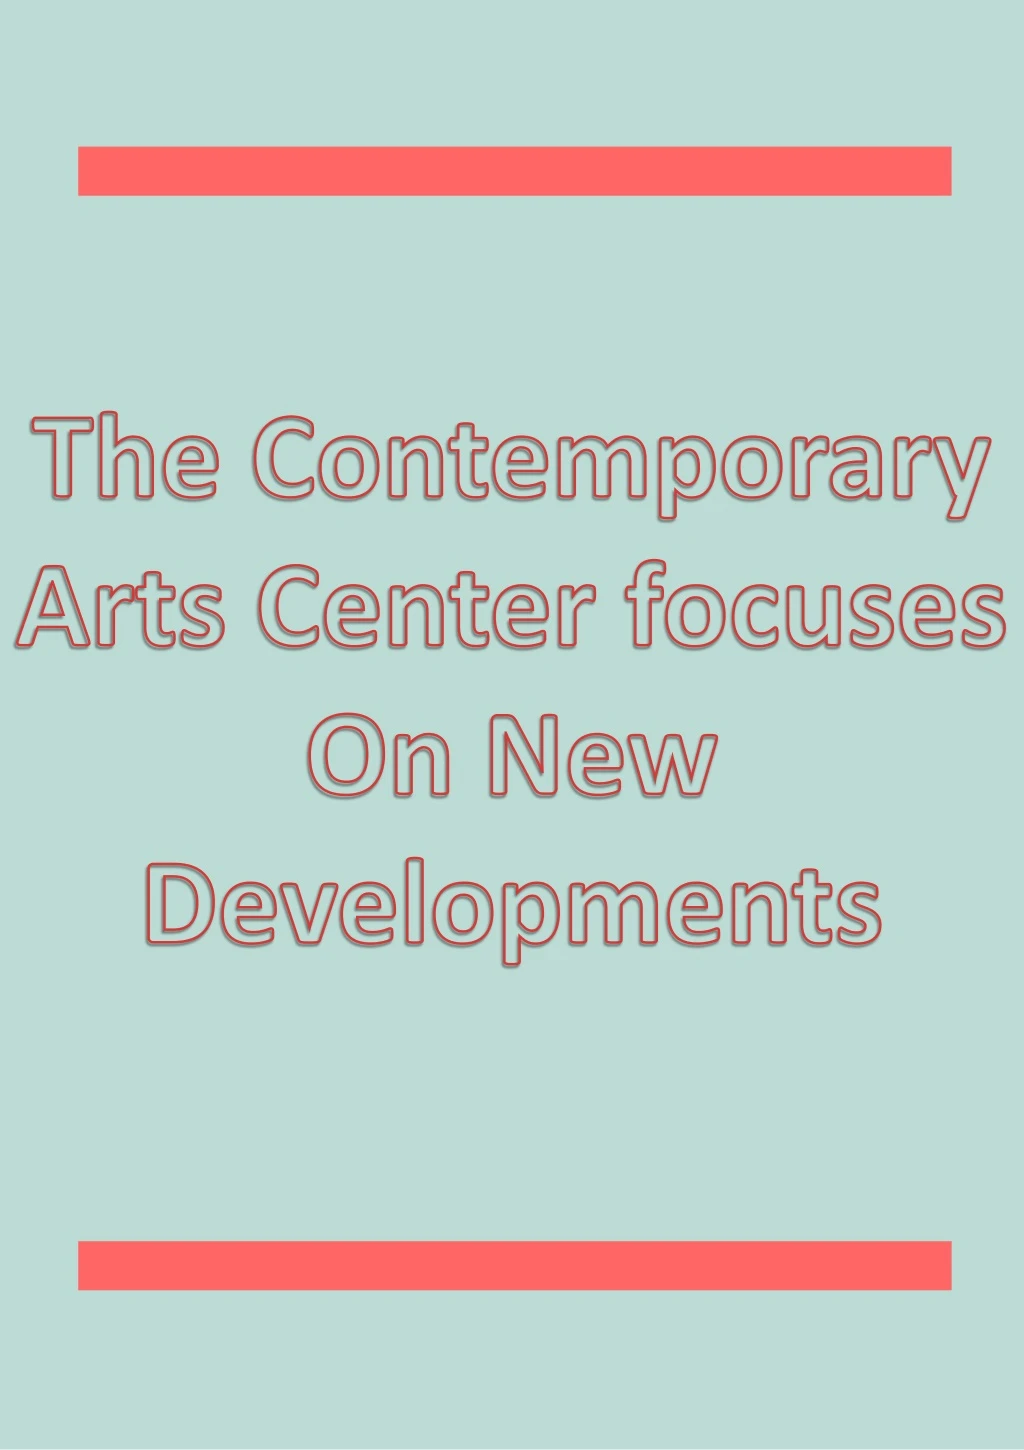 the contemporary arts center focuses